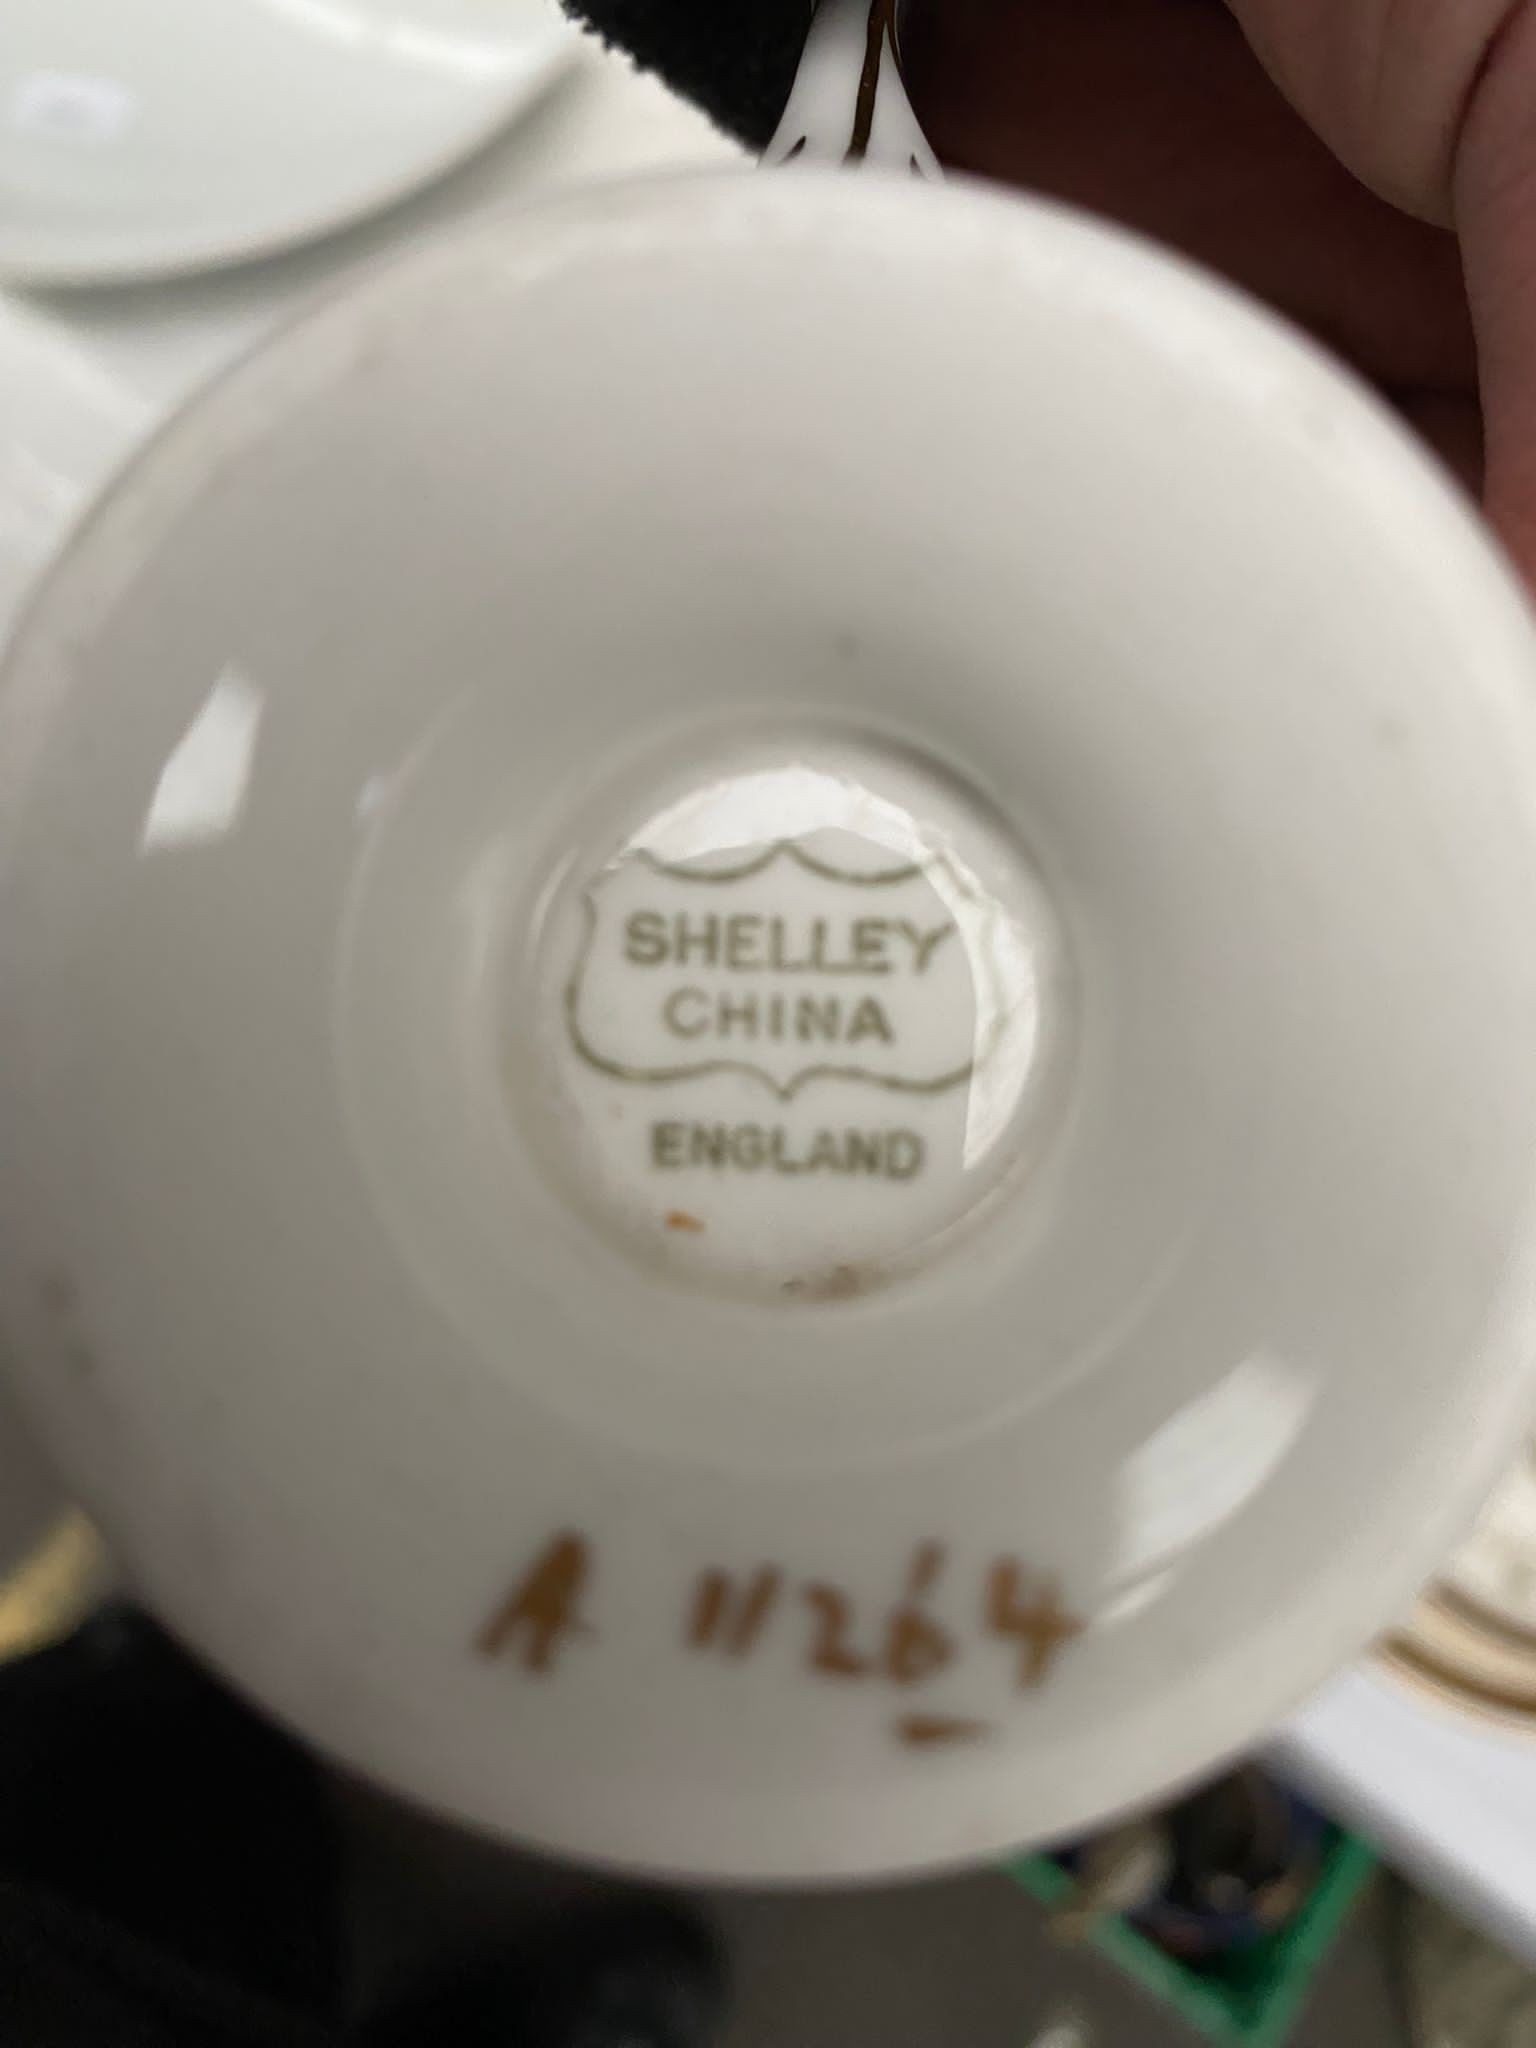 A vintage Shelley tea service detailing gilt design trims etc - Image 2 of 2